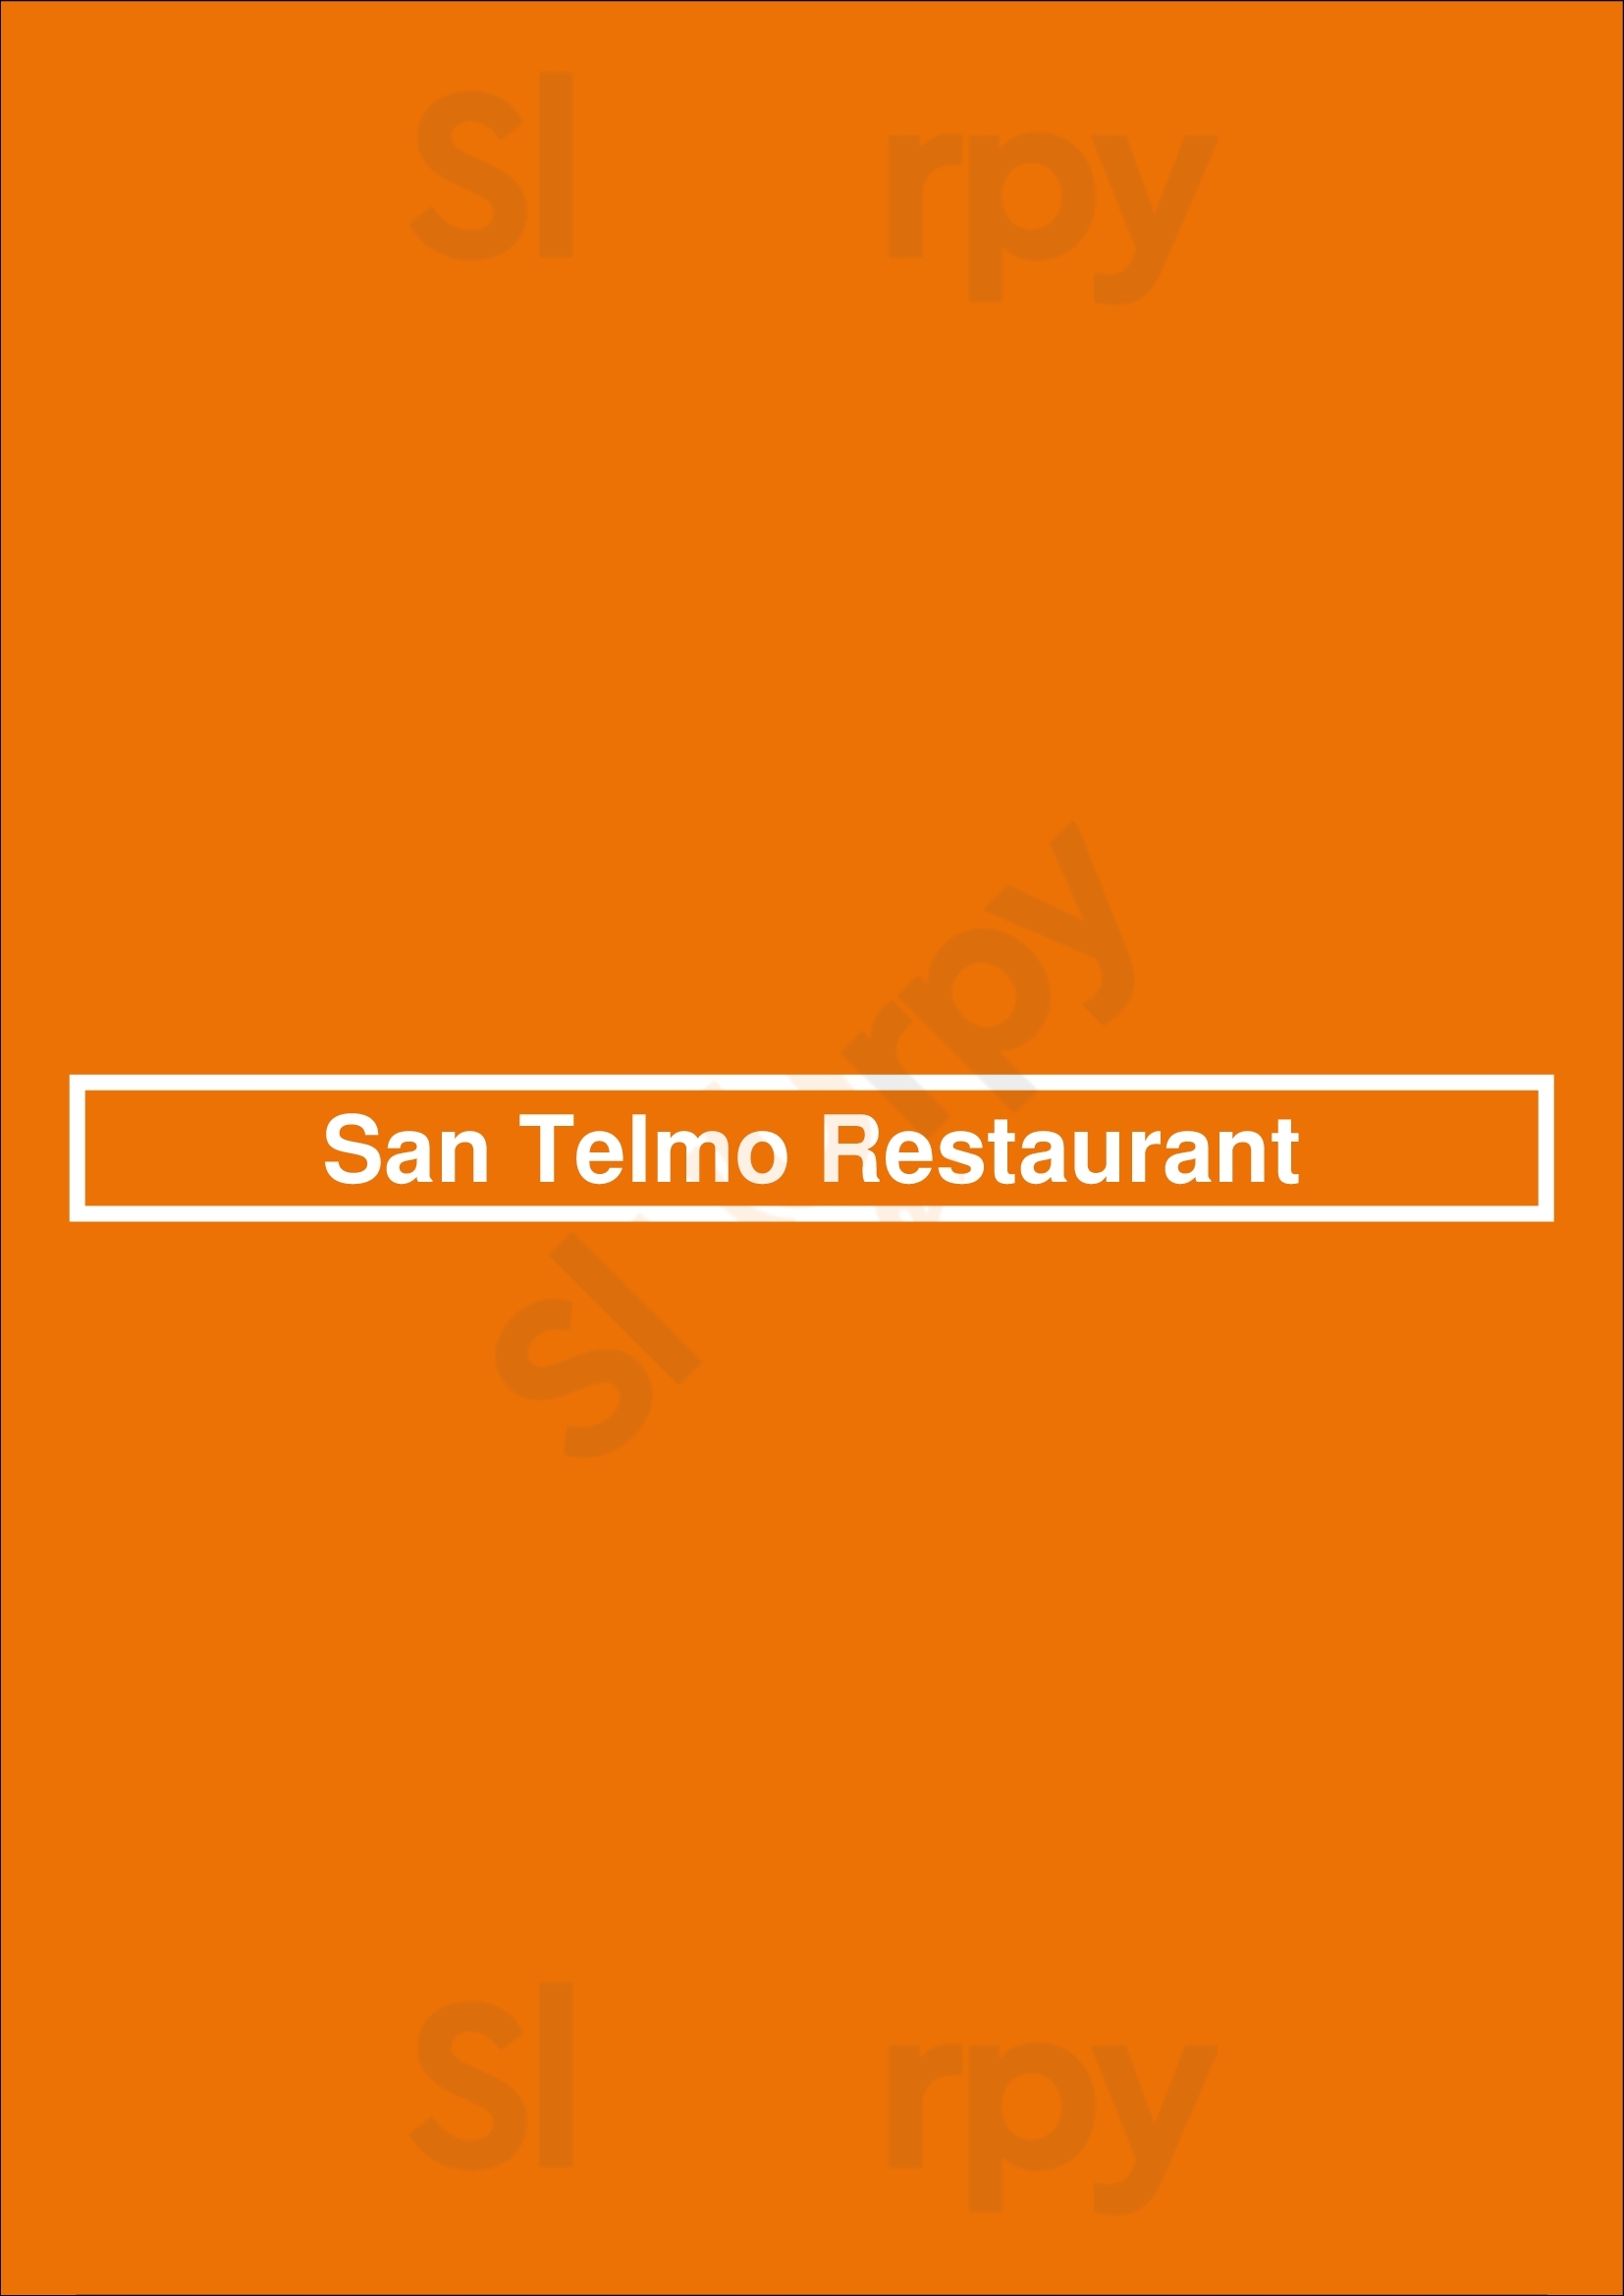 San Telmo Restaurant Den Haag Menu - 1